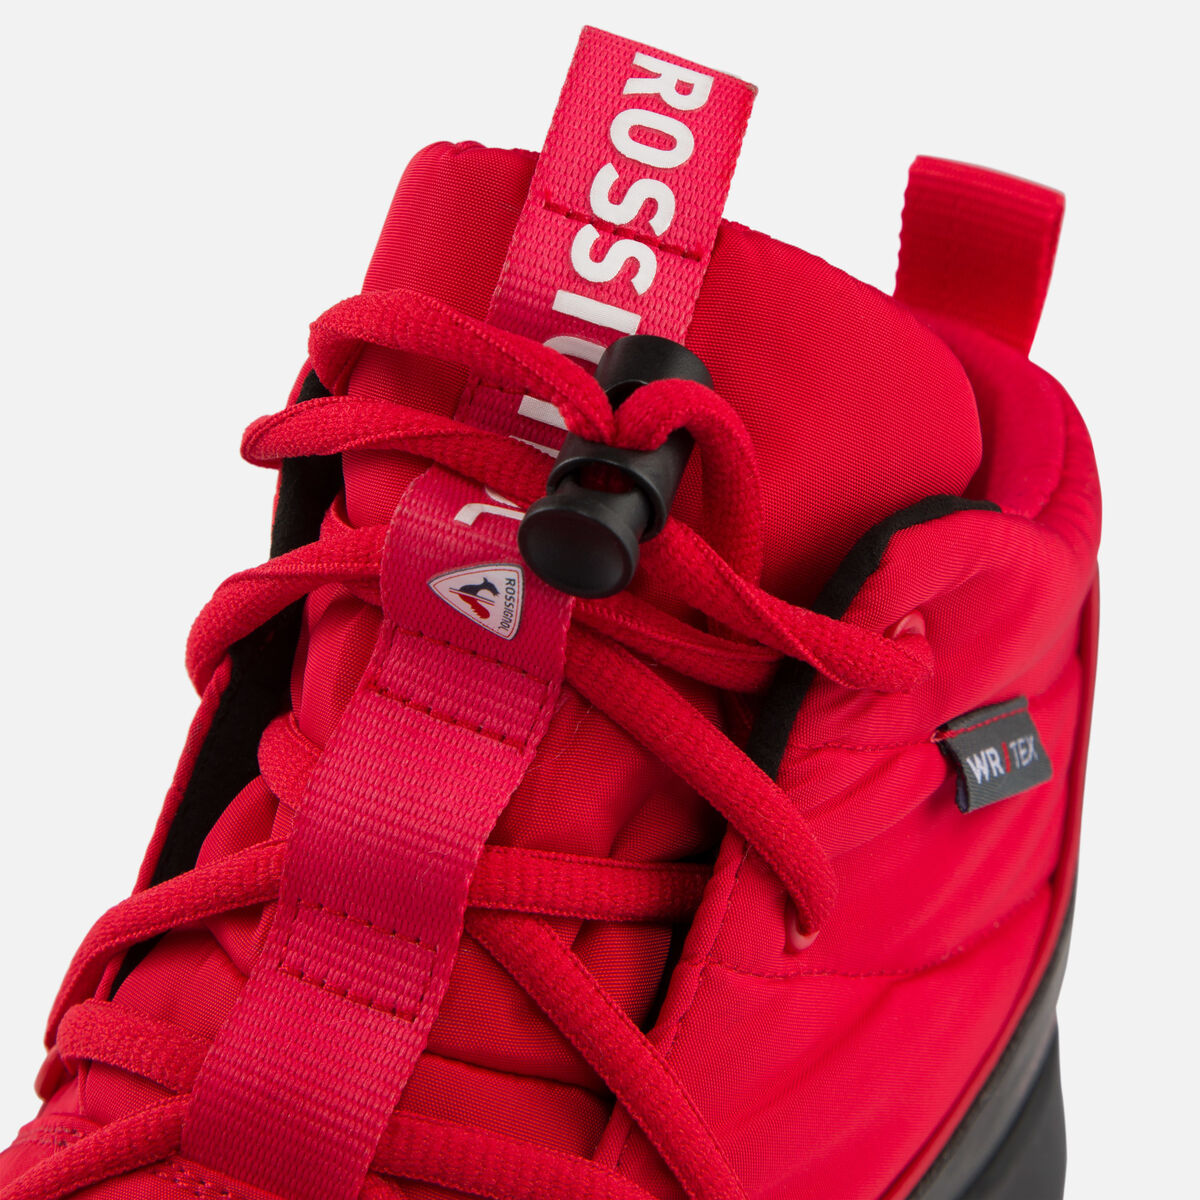 Unisex Resort Waterproof Red Apres Ski Boots